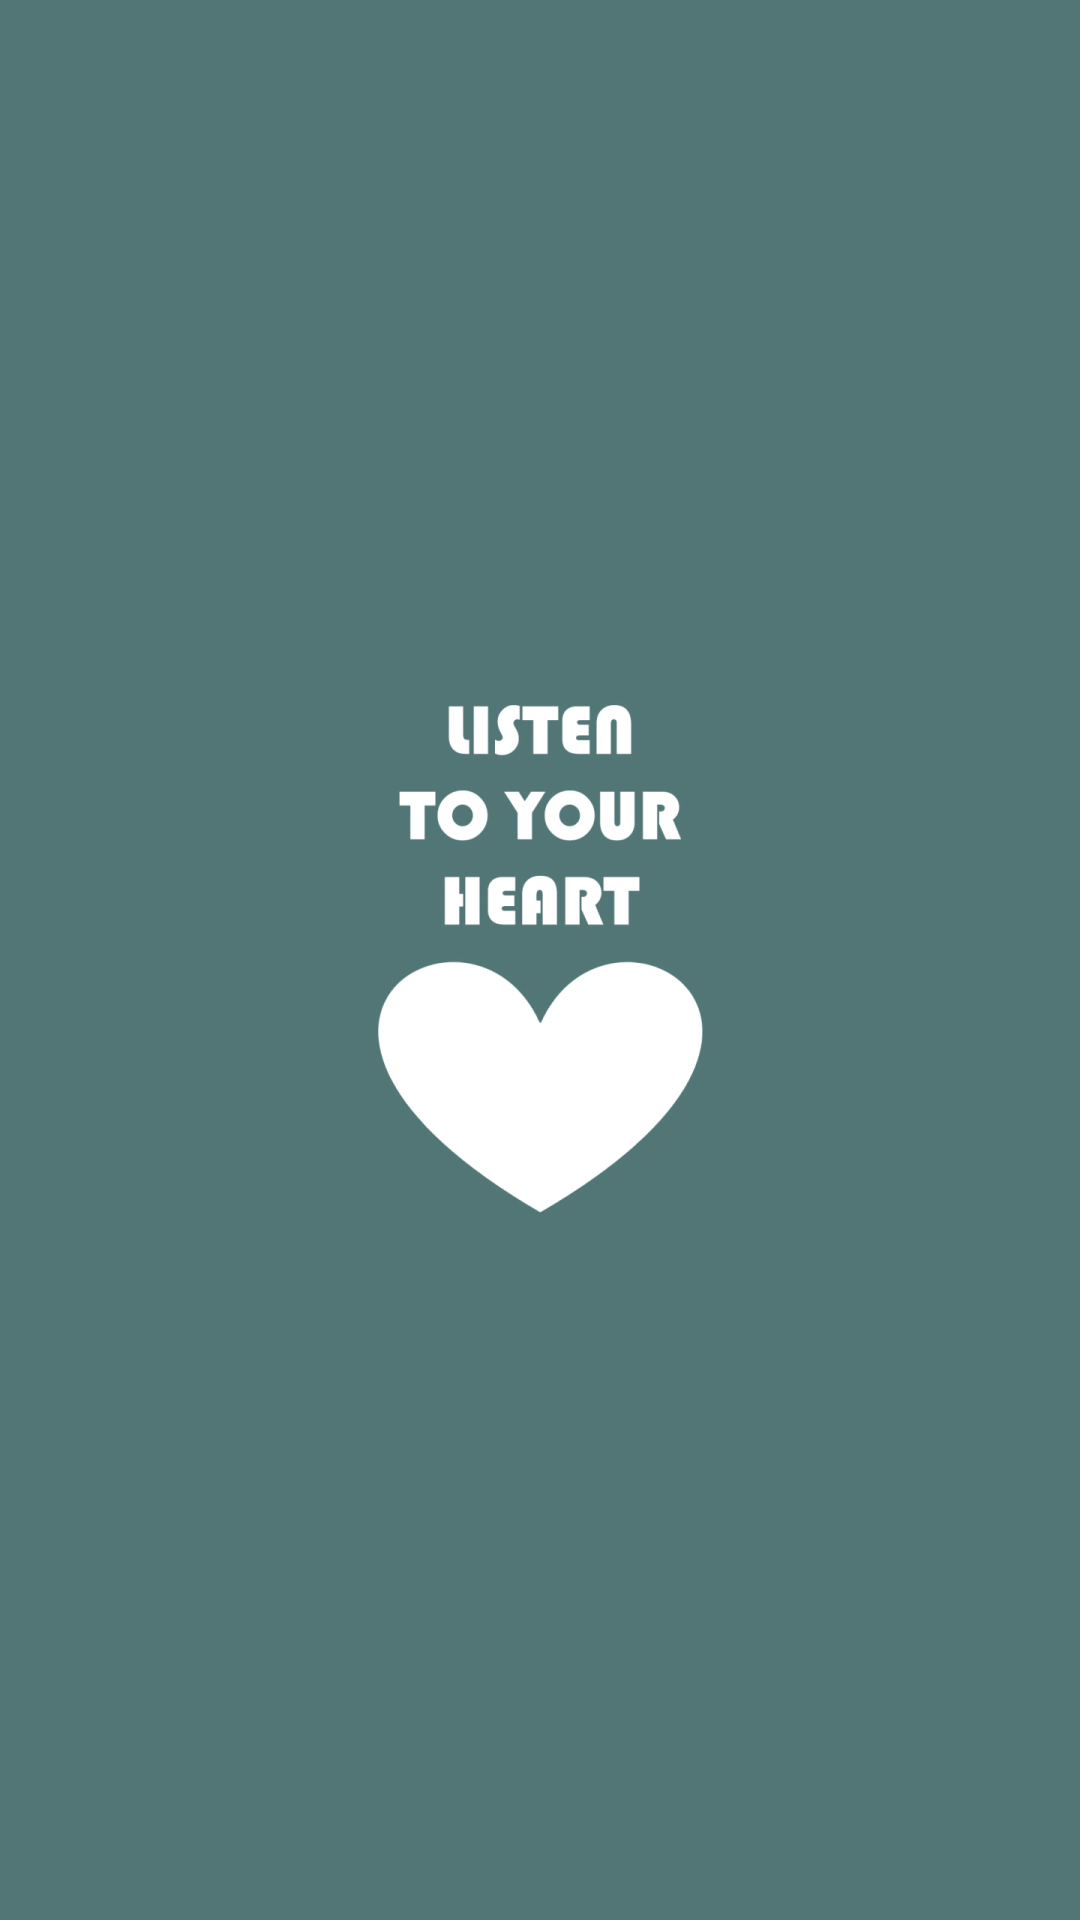 Listen To Your Heart wallpaper 1080x1920